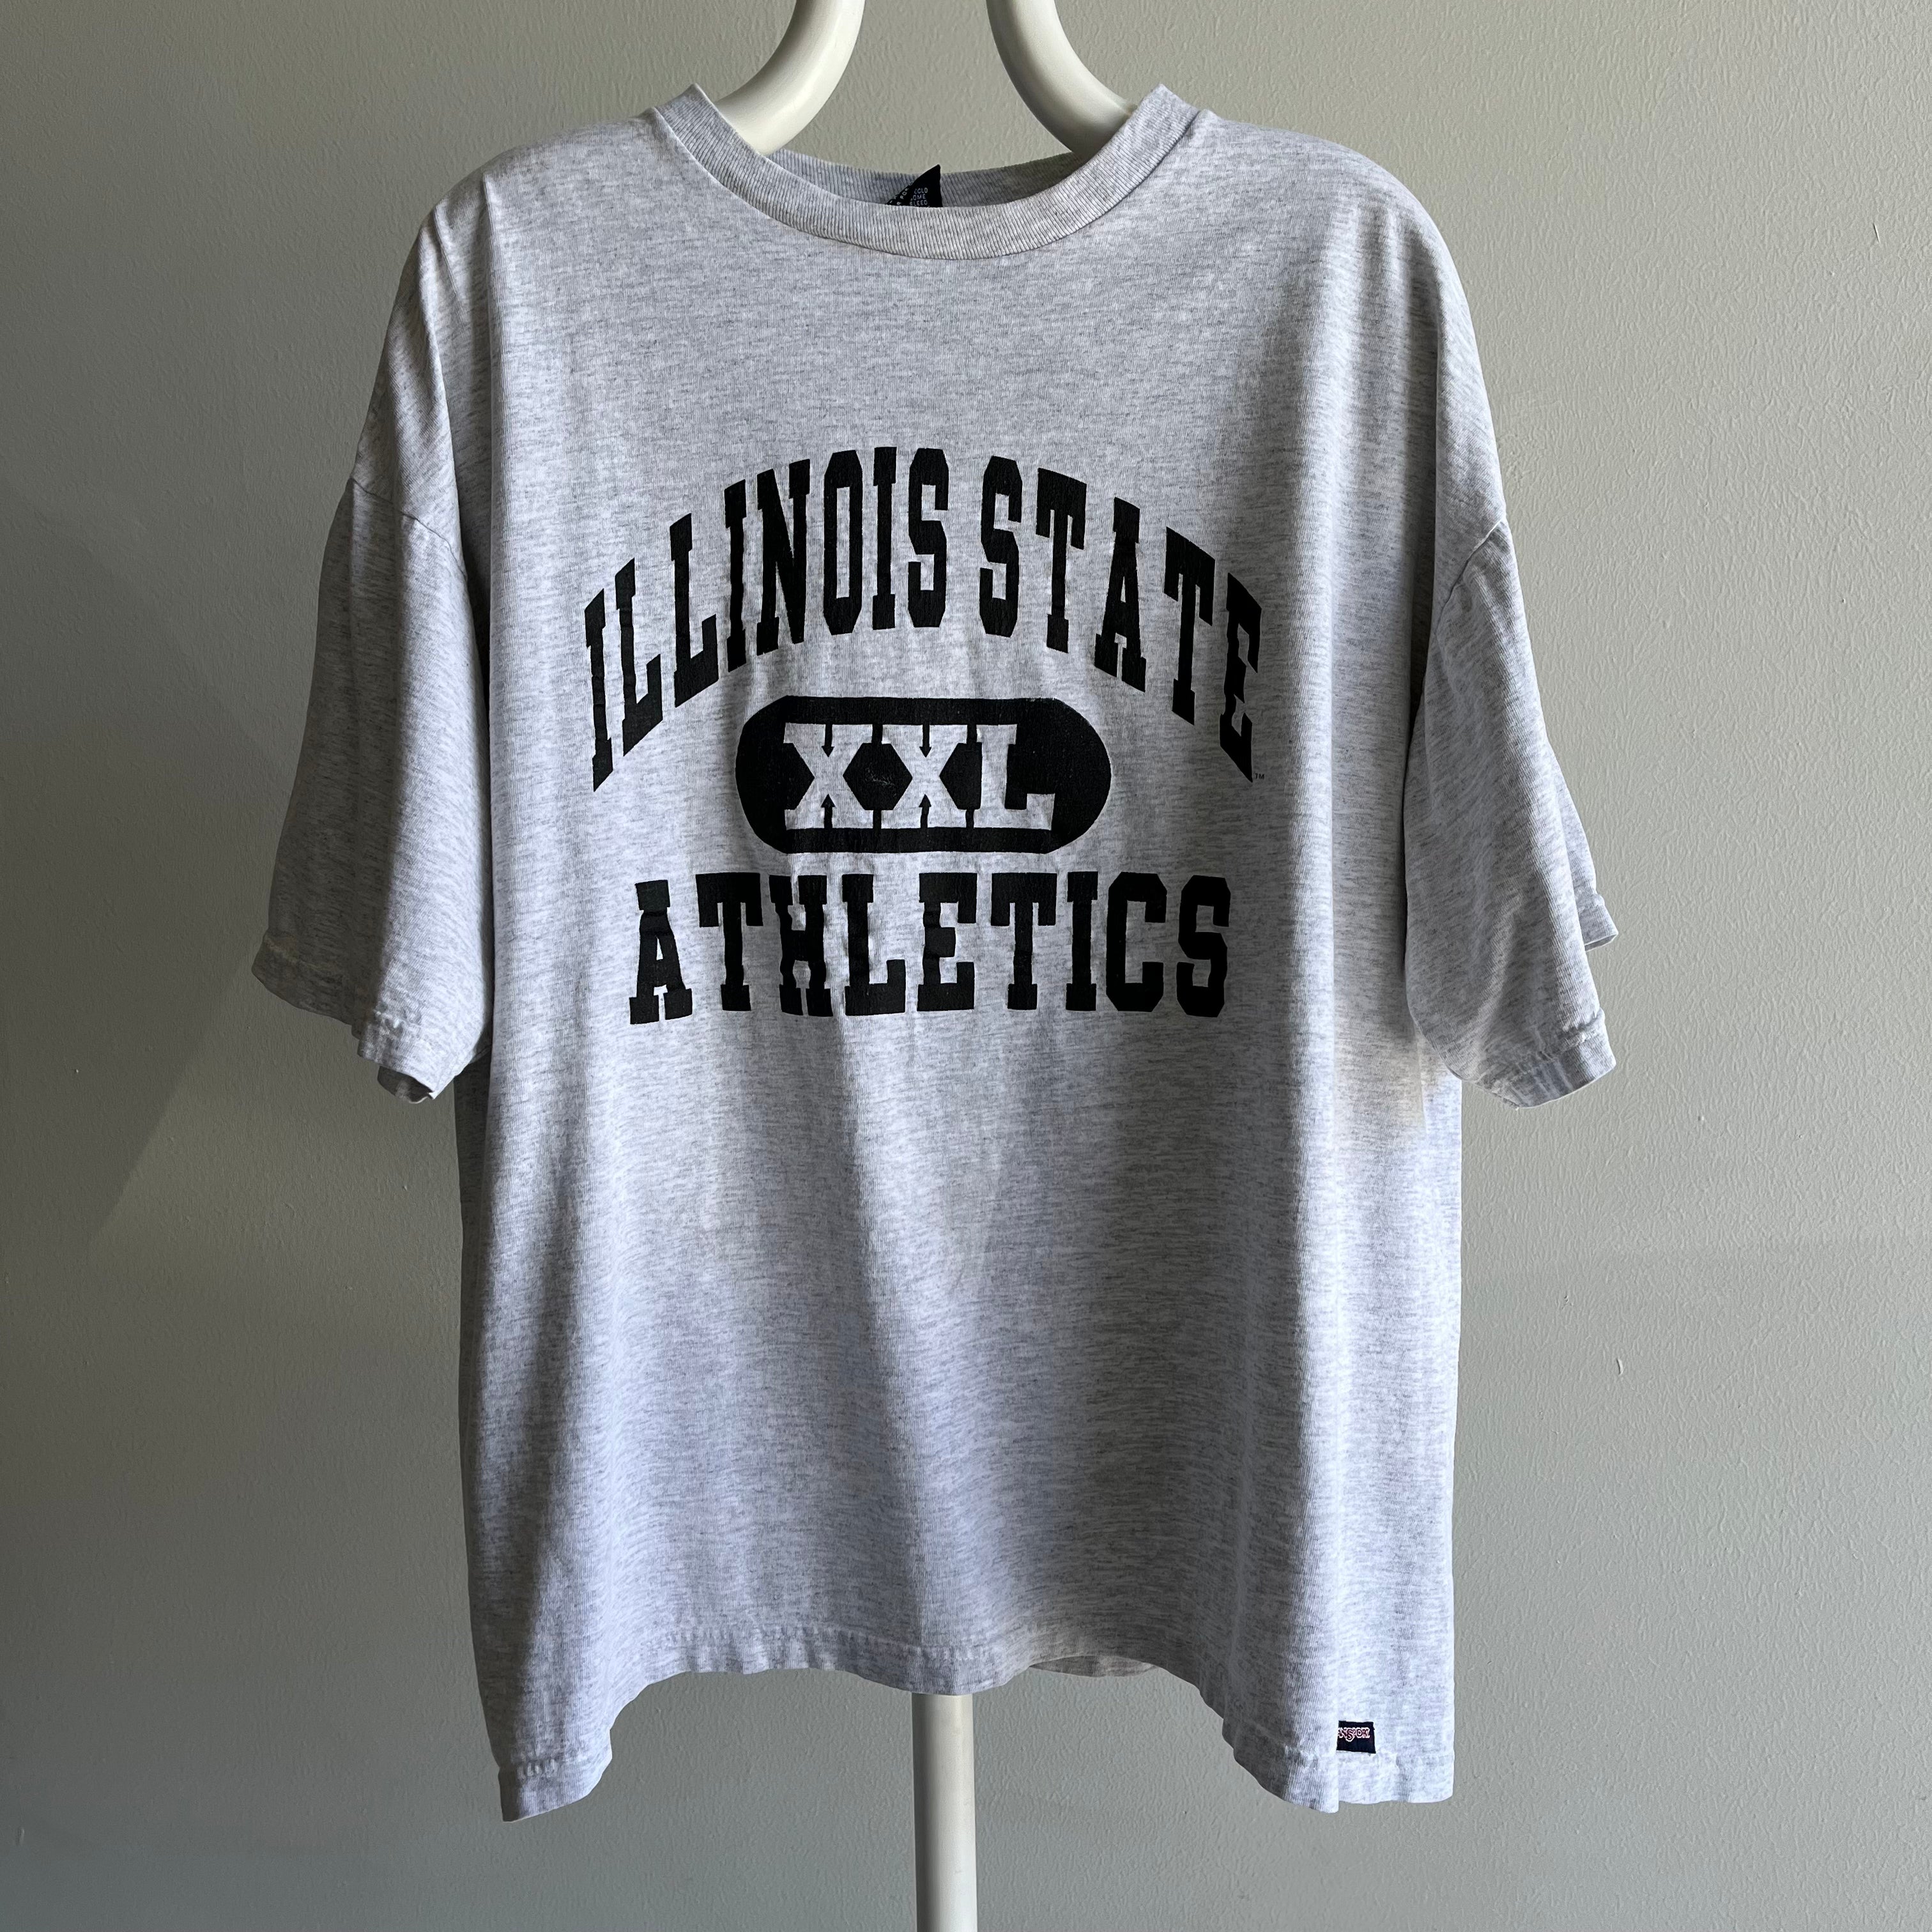 1990s Illinois State Athletics Oversized T-Shirt by Jansport